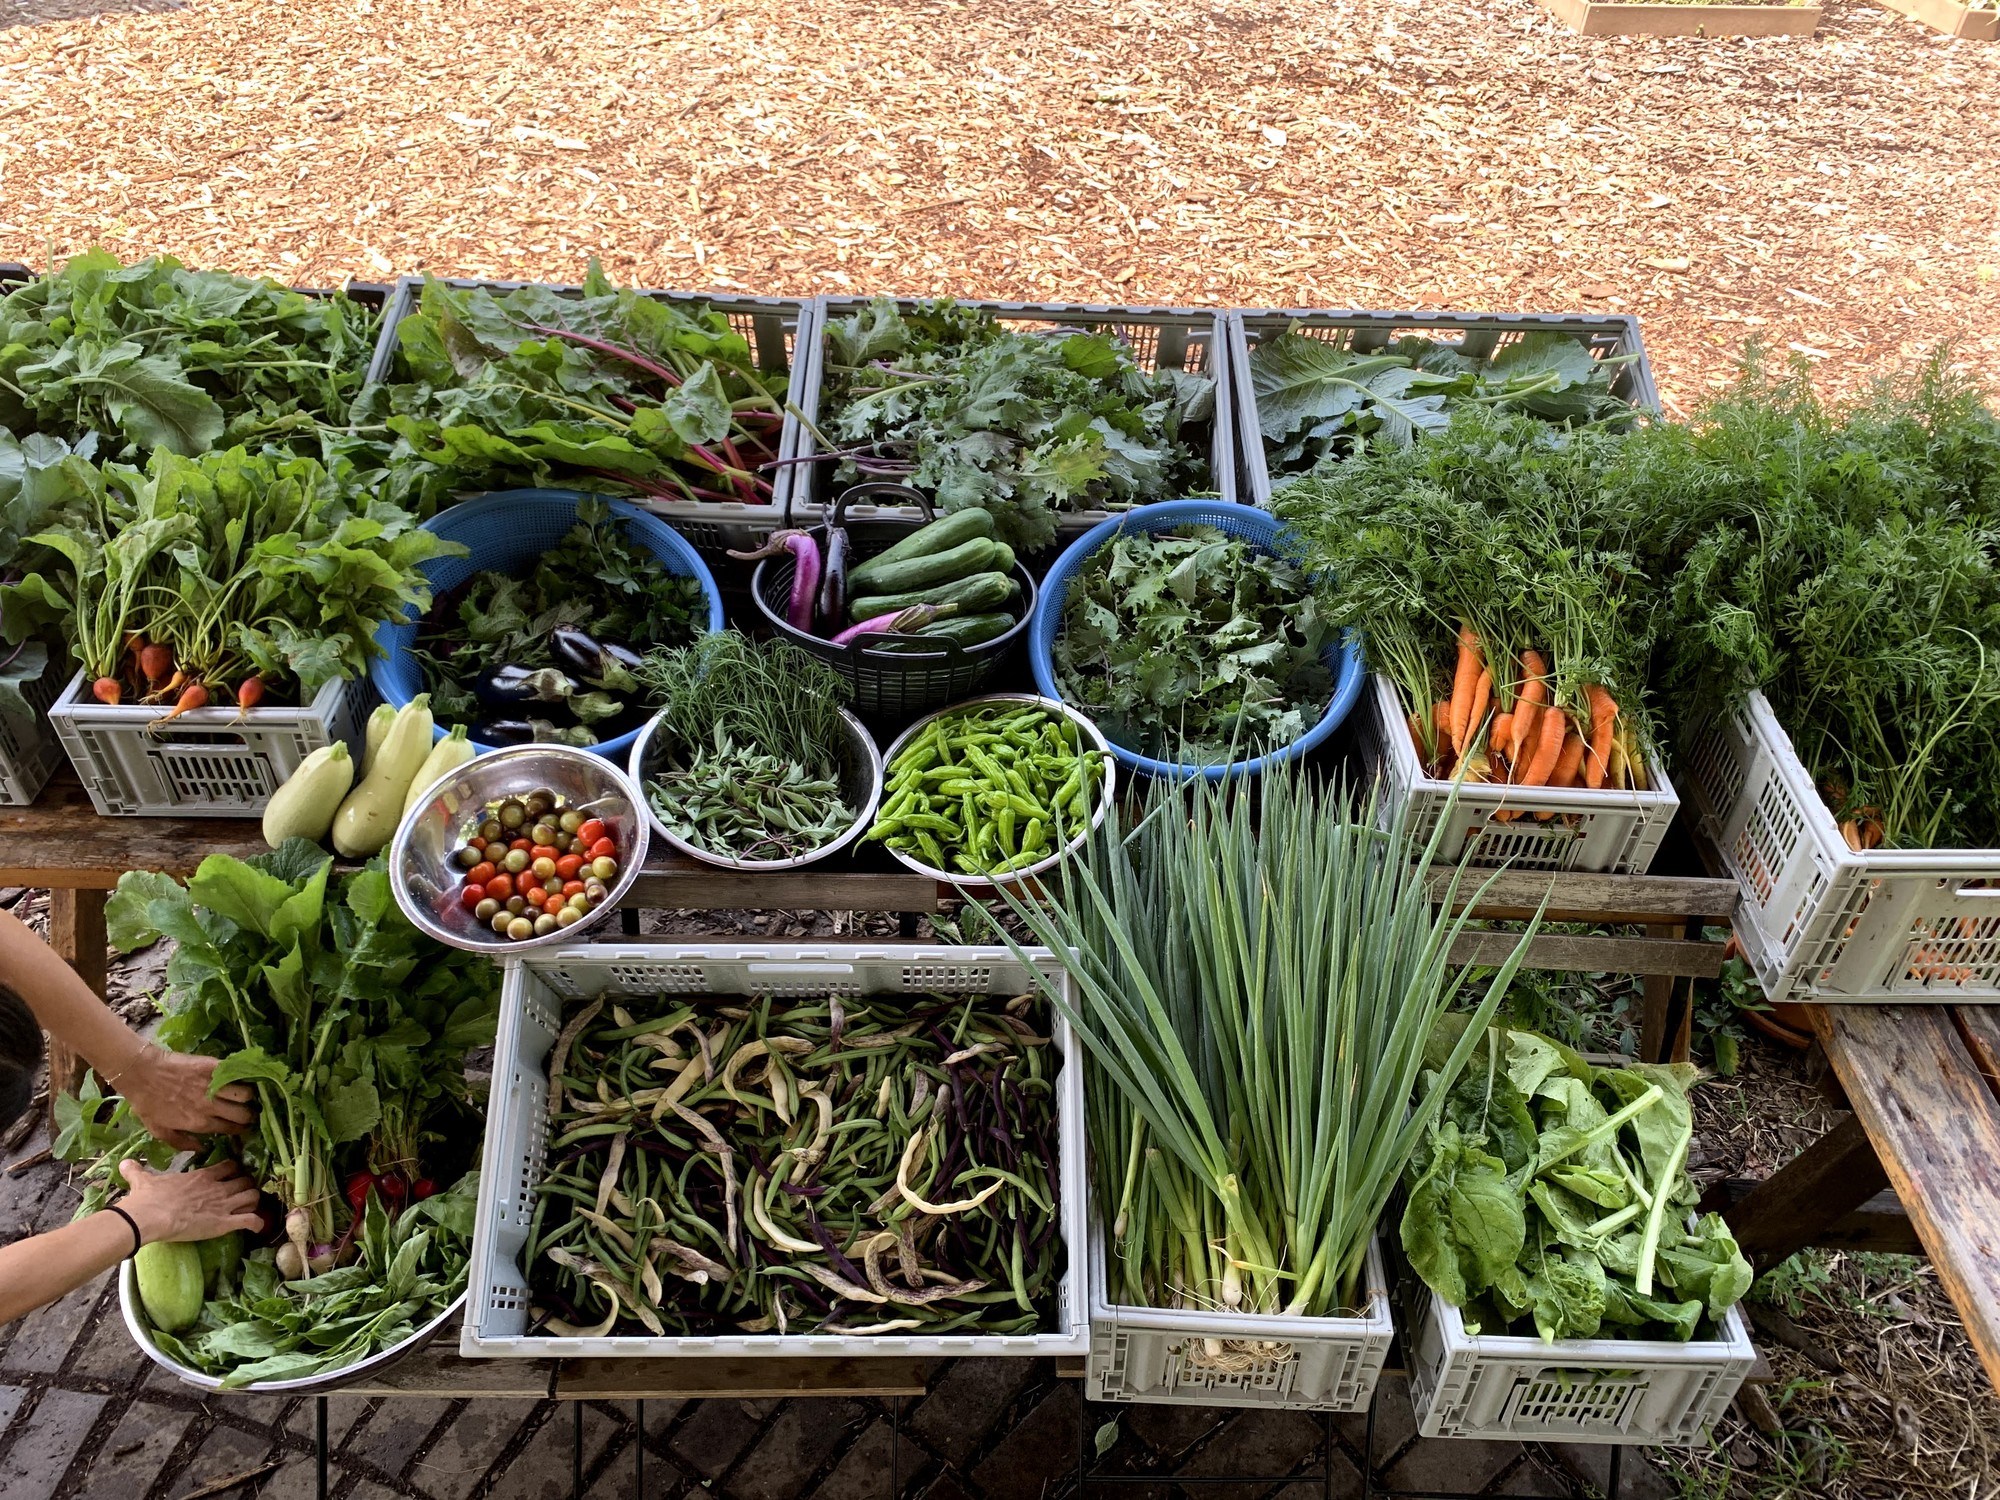 Image of fresh produce from Nicole Yeo's farm. July 2021.